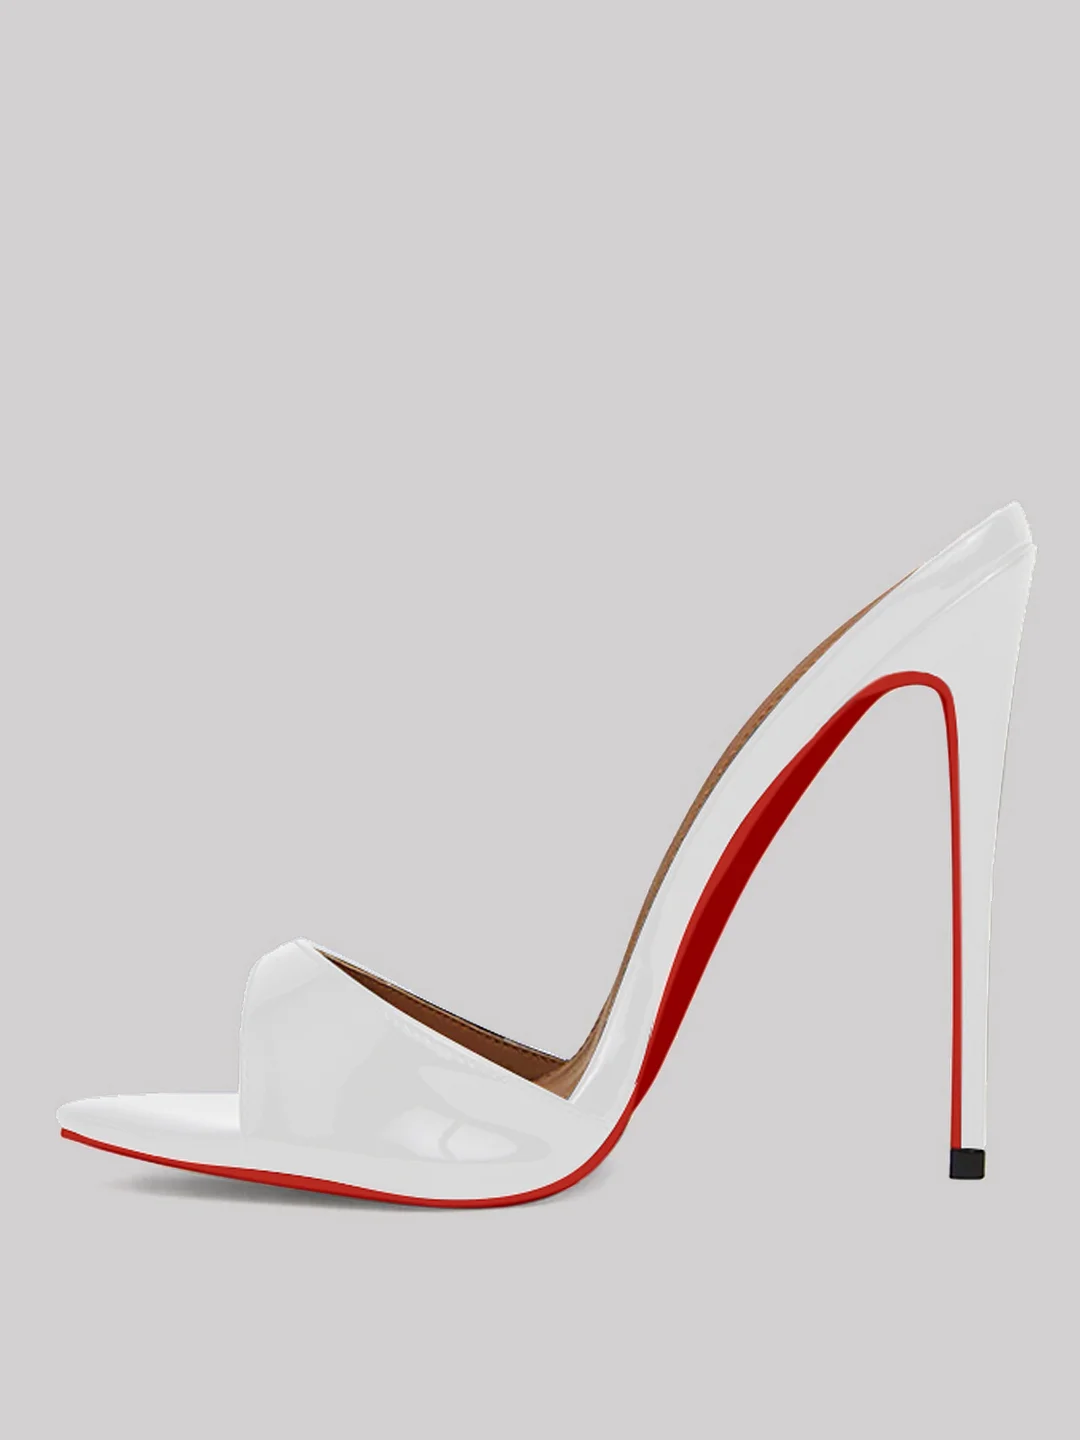 85mm Women's Open Toe Sandals Stiletto Red Bottom High Heels Vegan Mules Patent Shoes